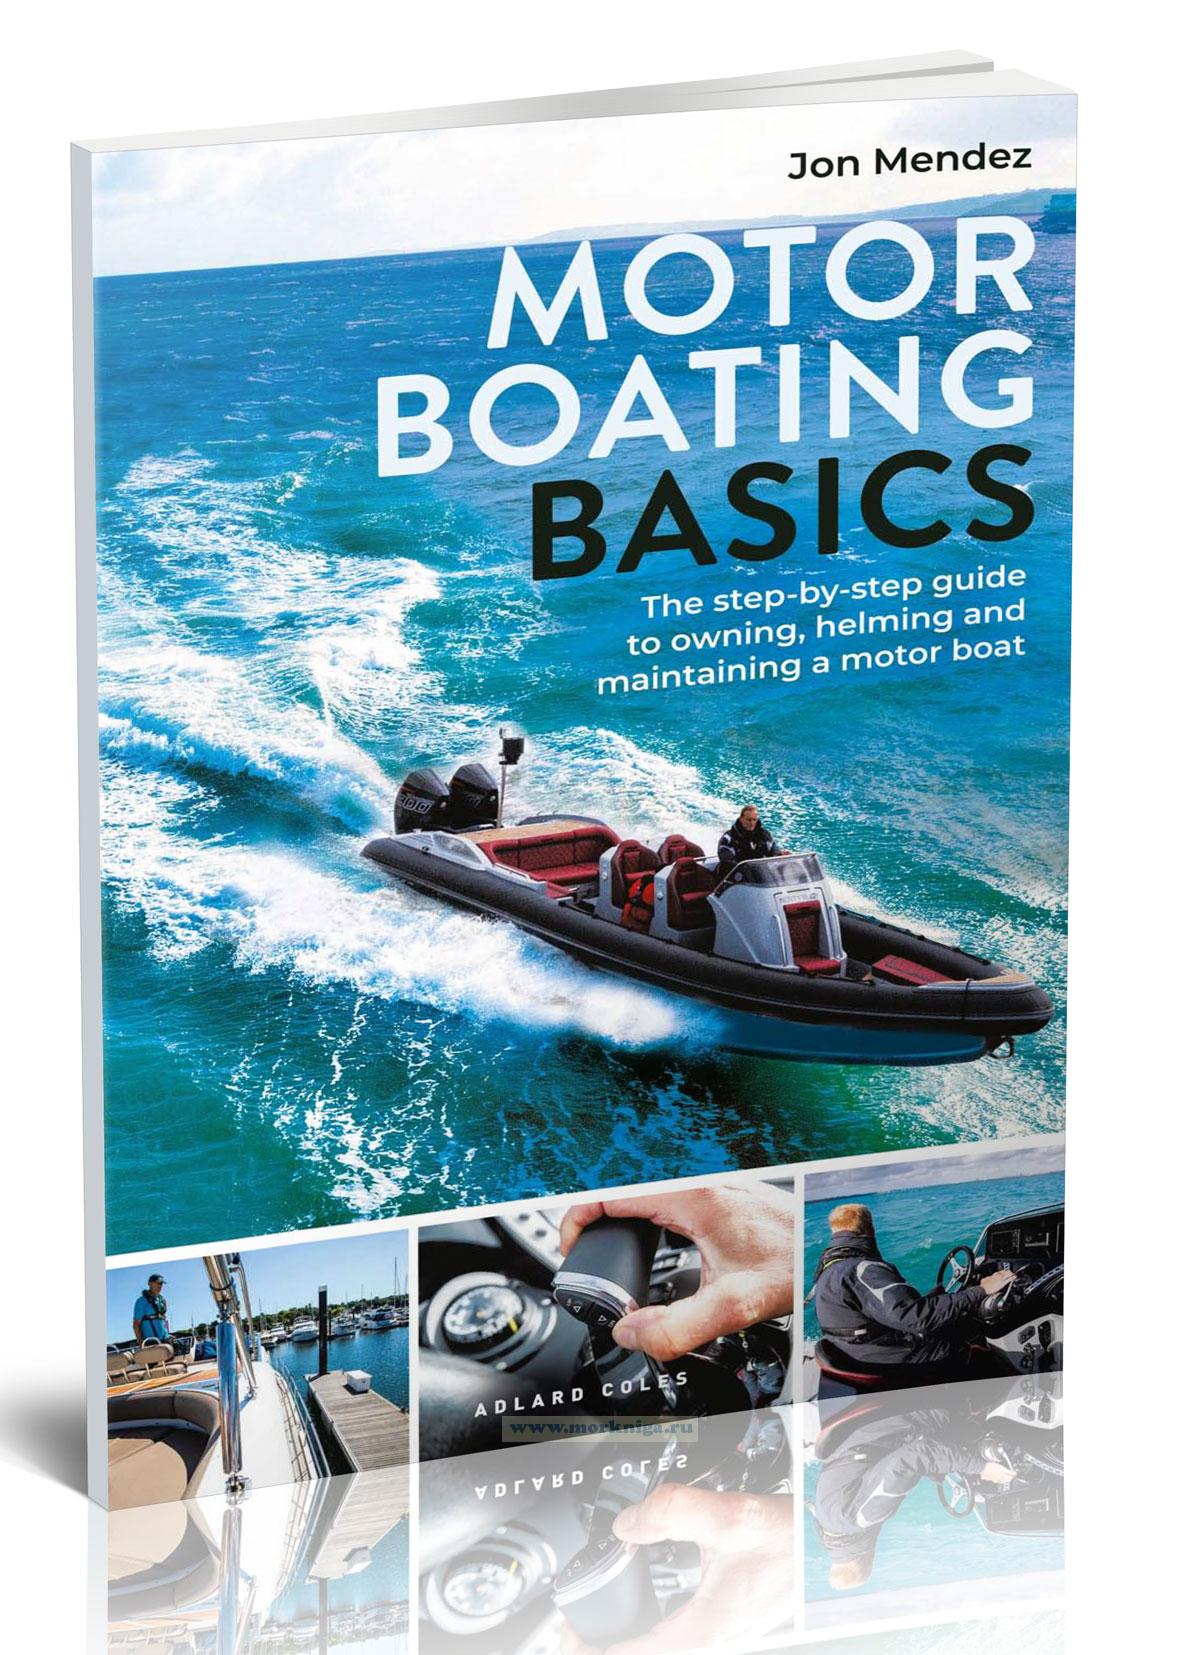 Motor Boating Basics (J. Mendez)/Основы мореплавания на моторной лодке